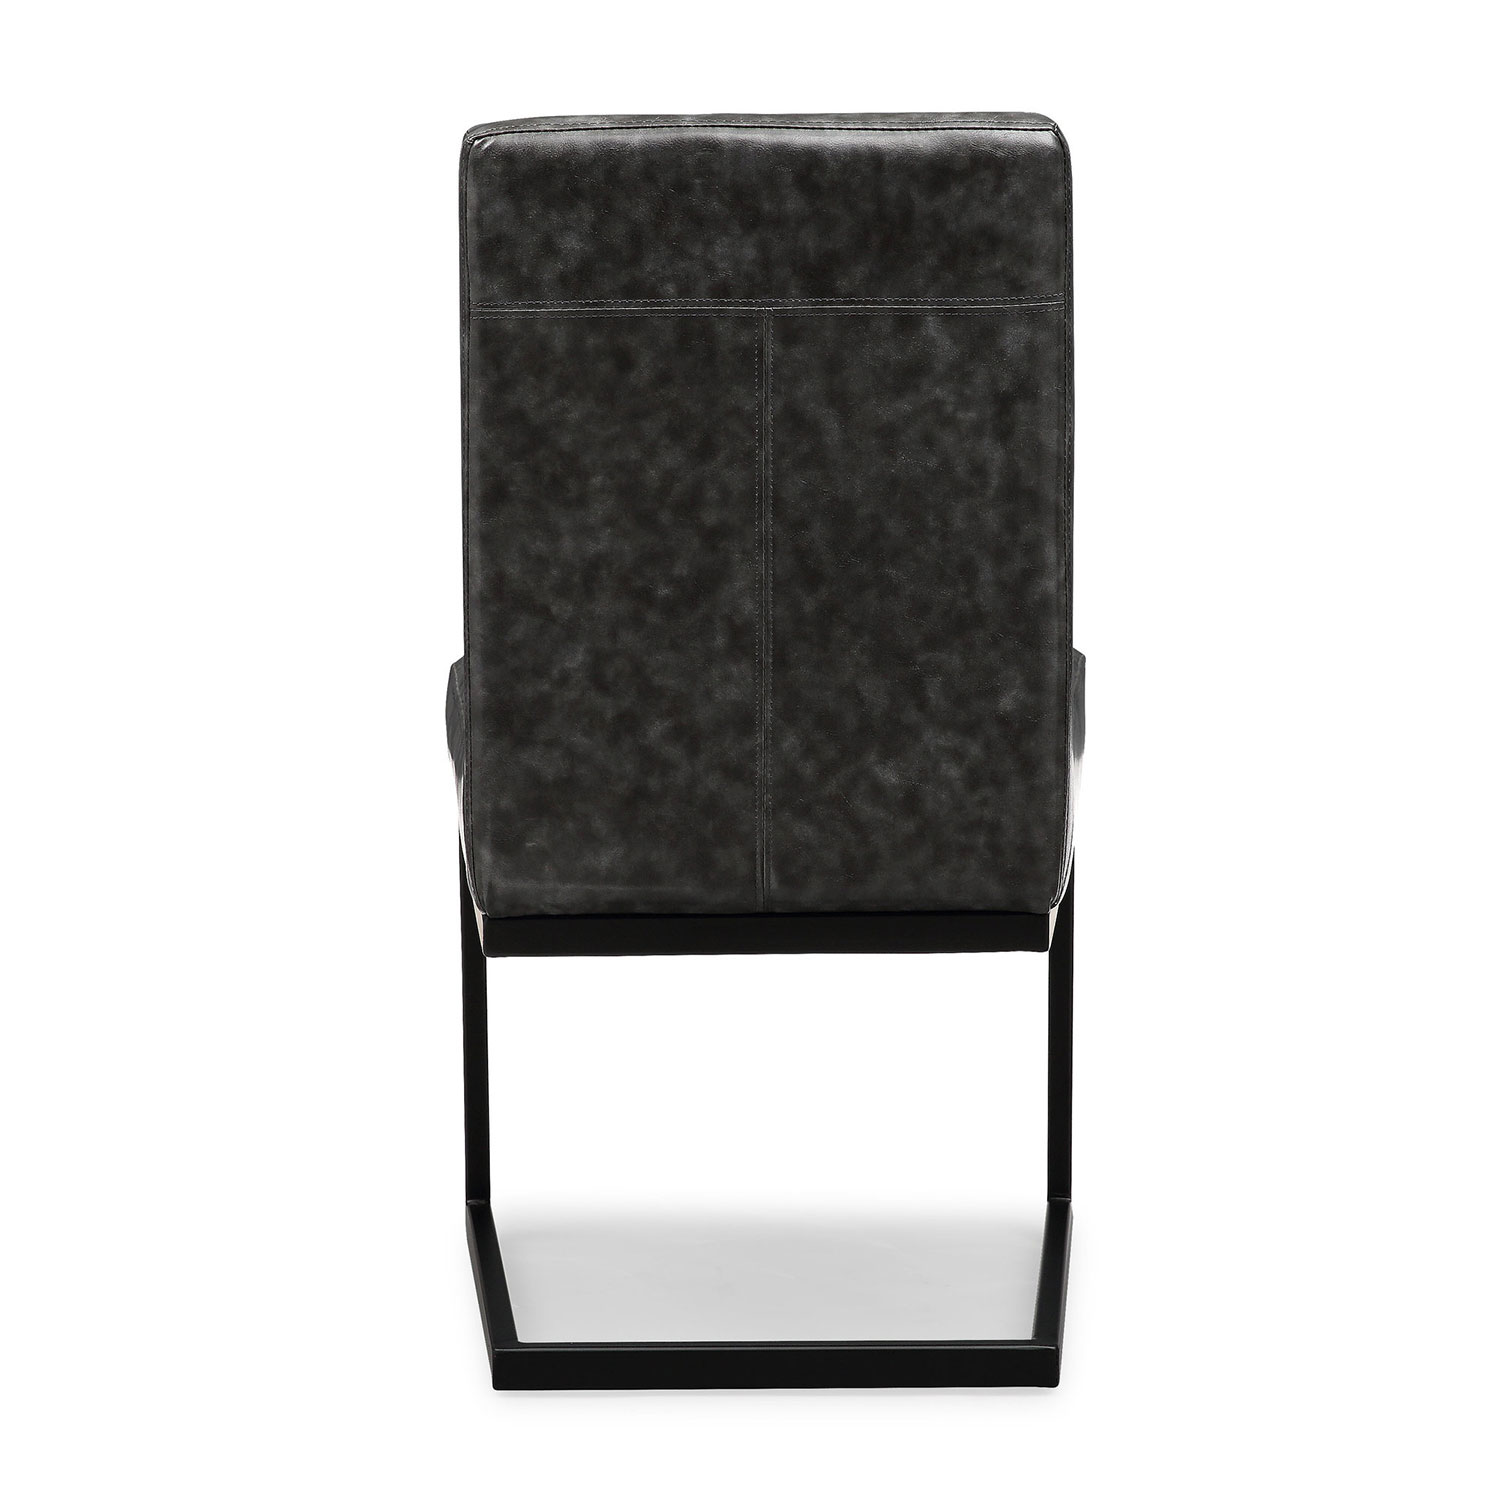 TOV Furniture Austin Chair - Grey/Black - Set of 2